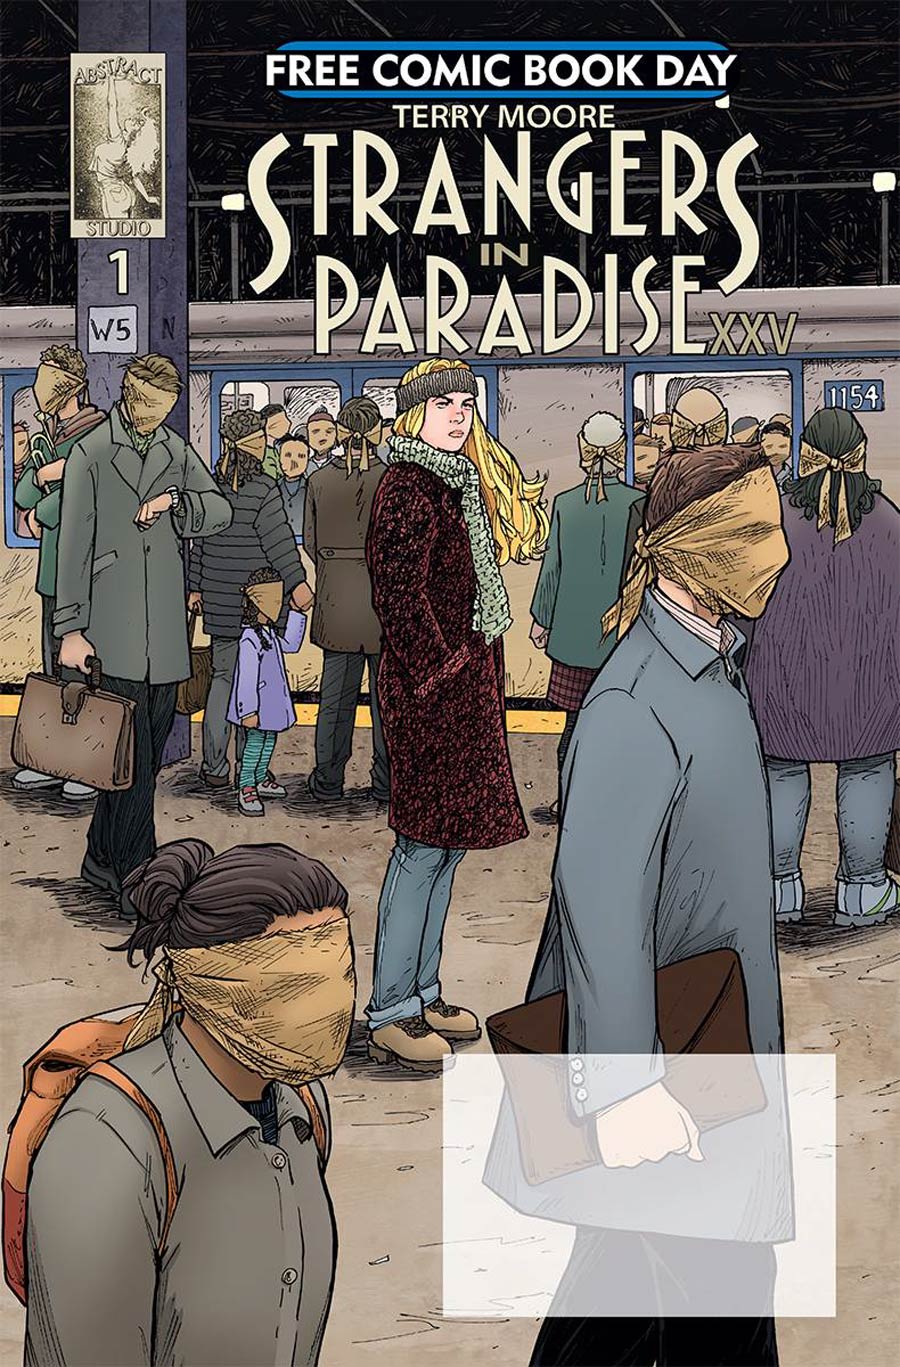 Strangers In Paradise XXV #1 Cover C FCBD 2018